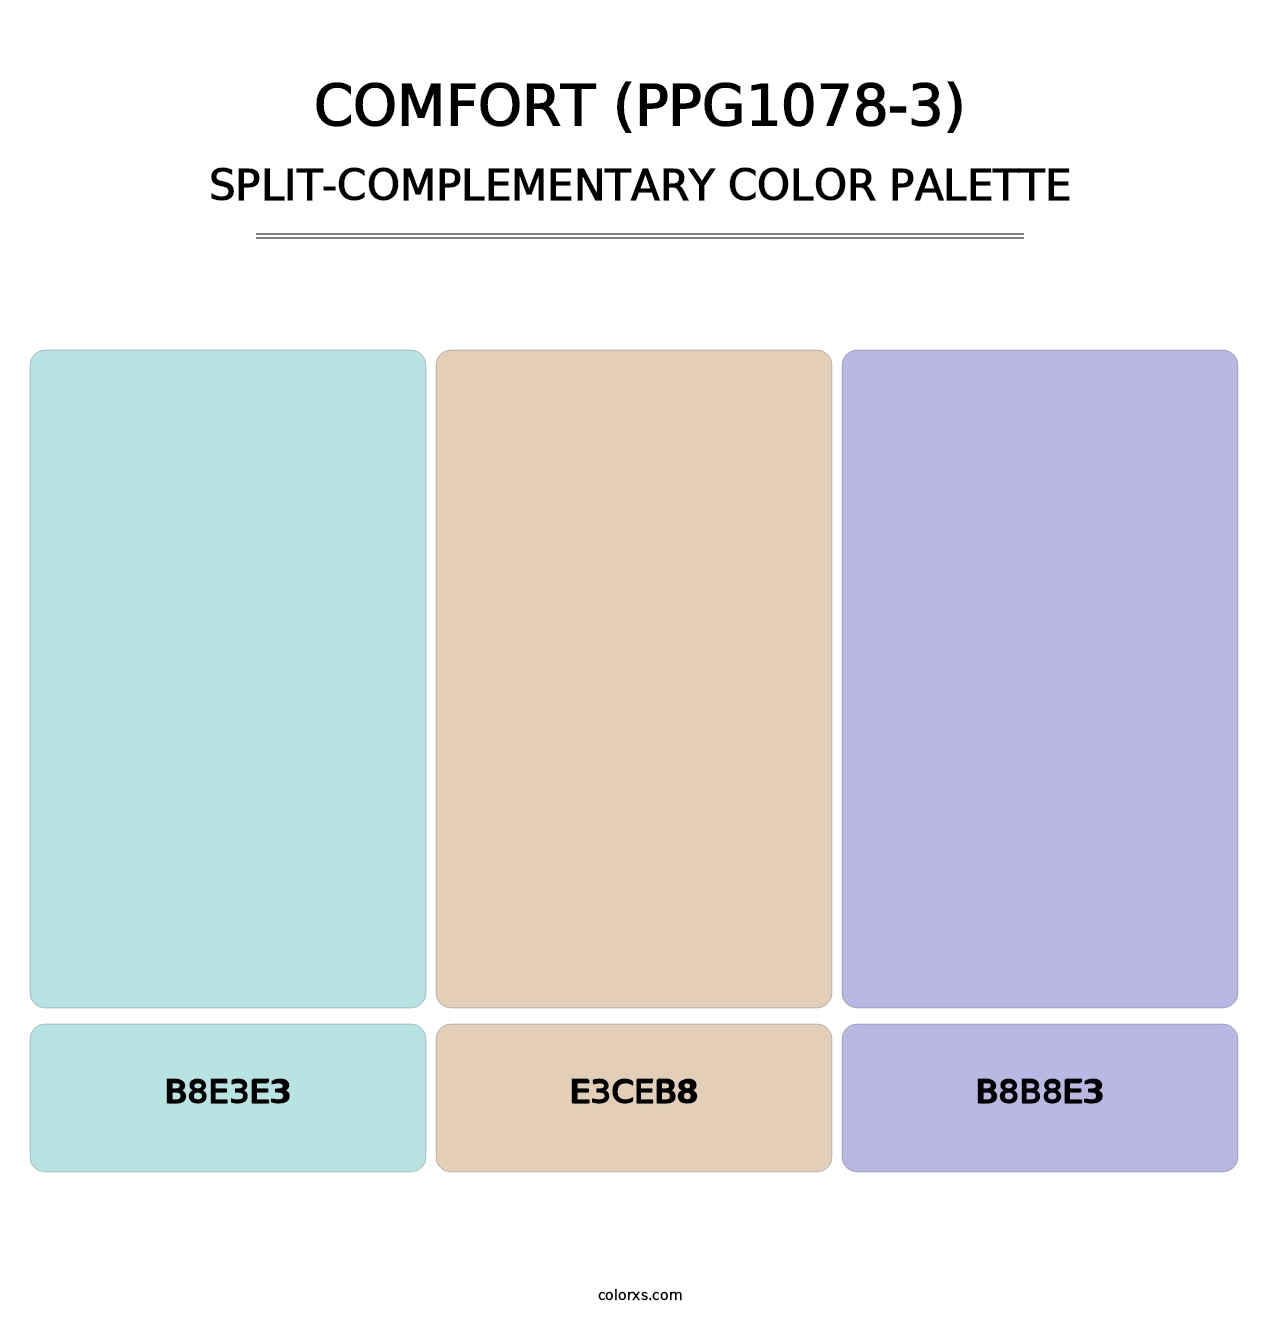 Comfort (PPG1078-3) - Split-Complementary Color Palette